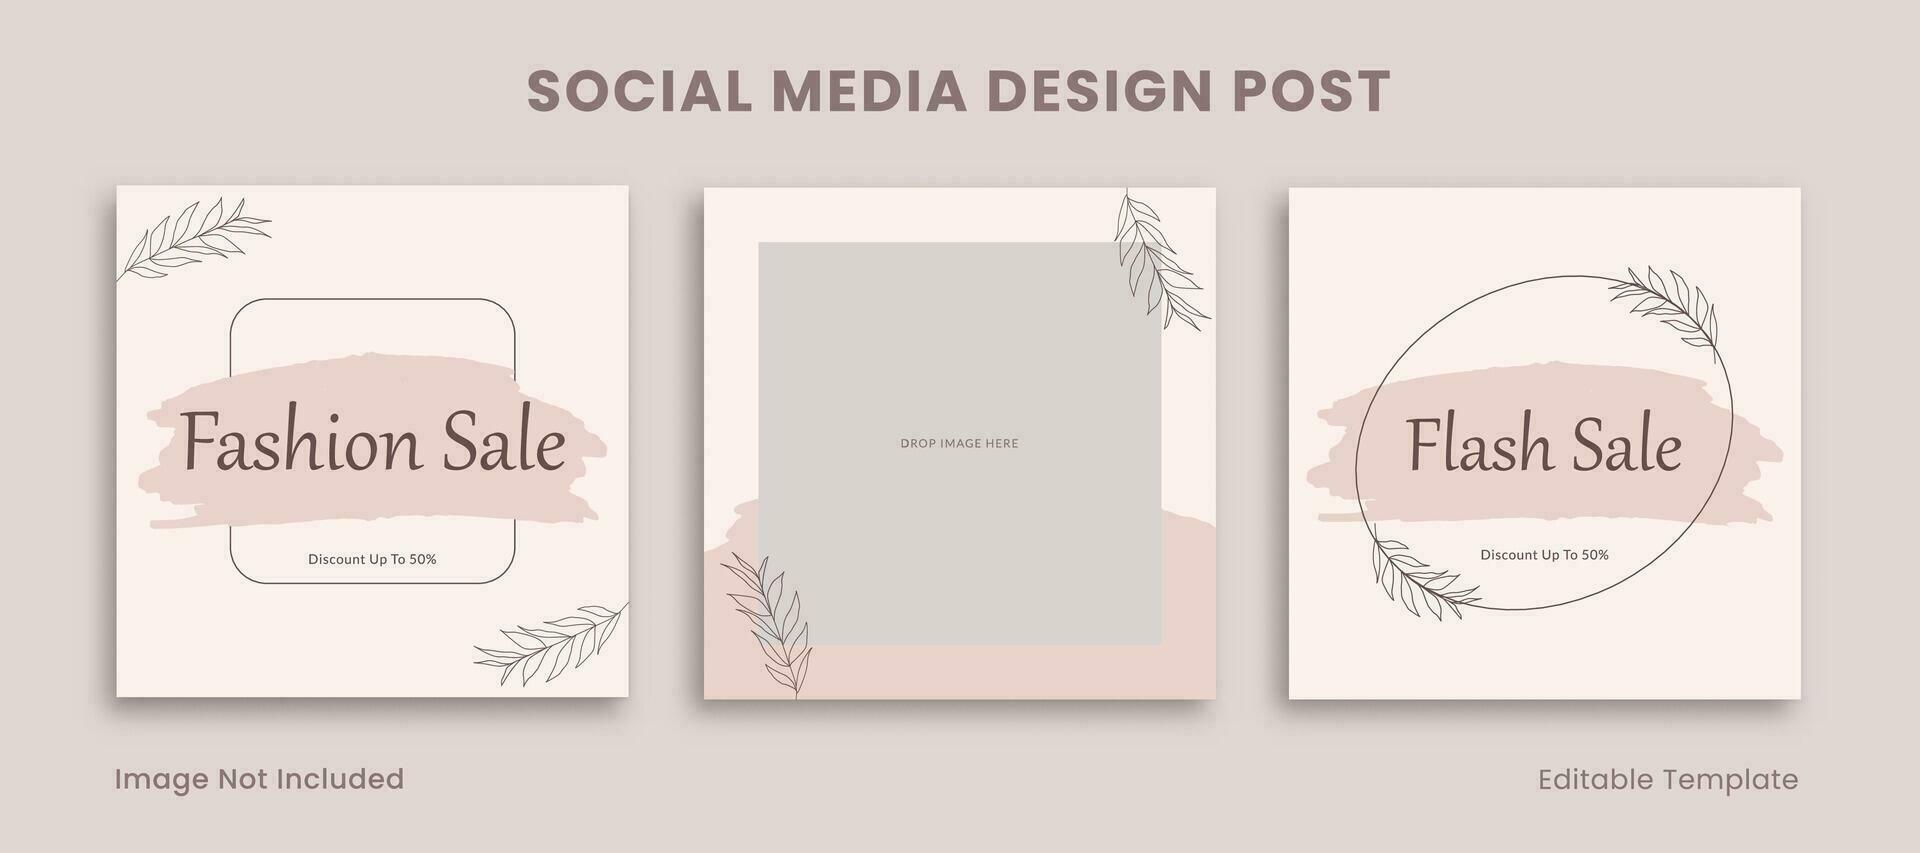 conjunto de editable social medios de comunicación diseño enviar modelo decorado con rosado botánico marco. adecuado para publicidad, promoción, marca producto belleza, moda, cosmético, femenino vector